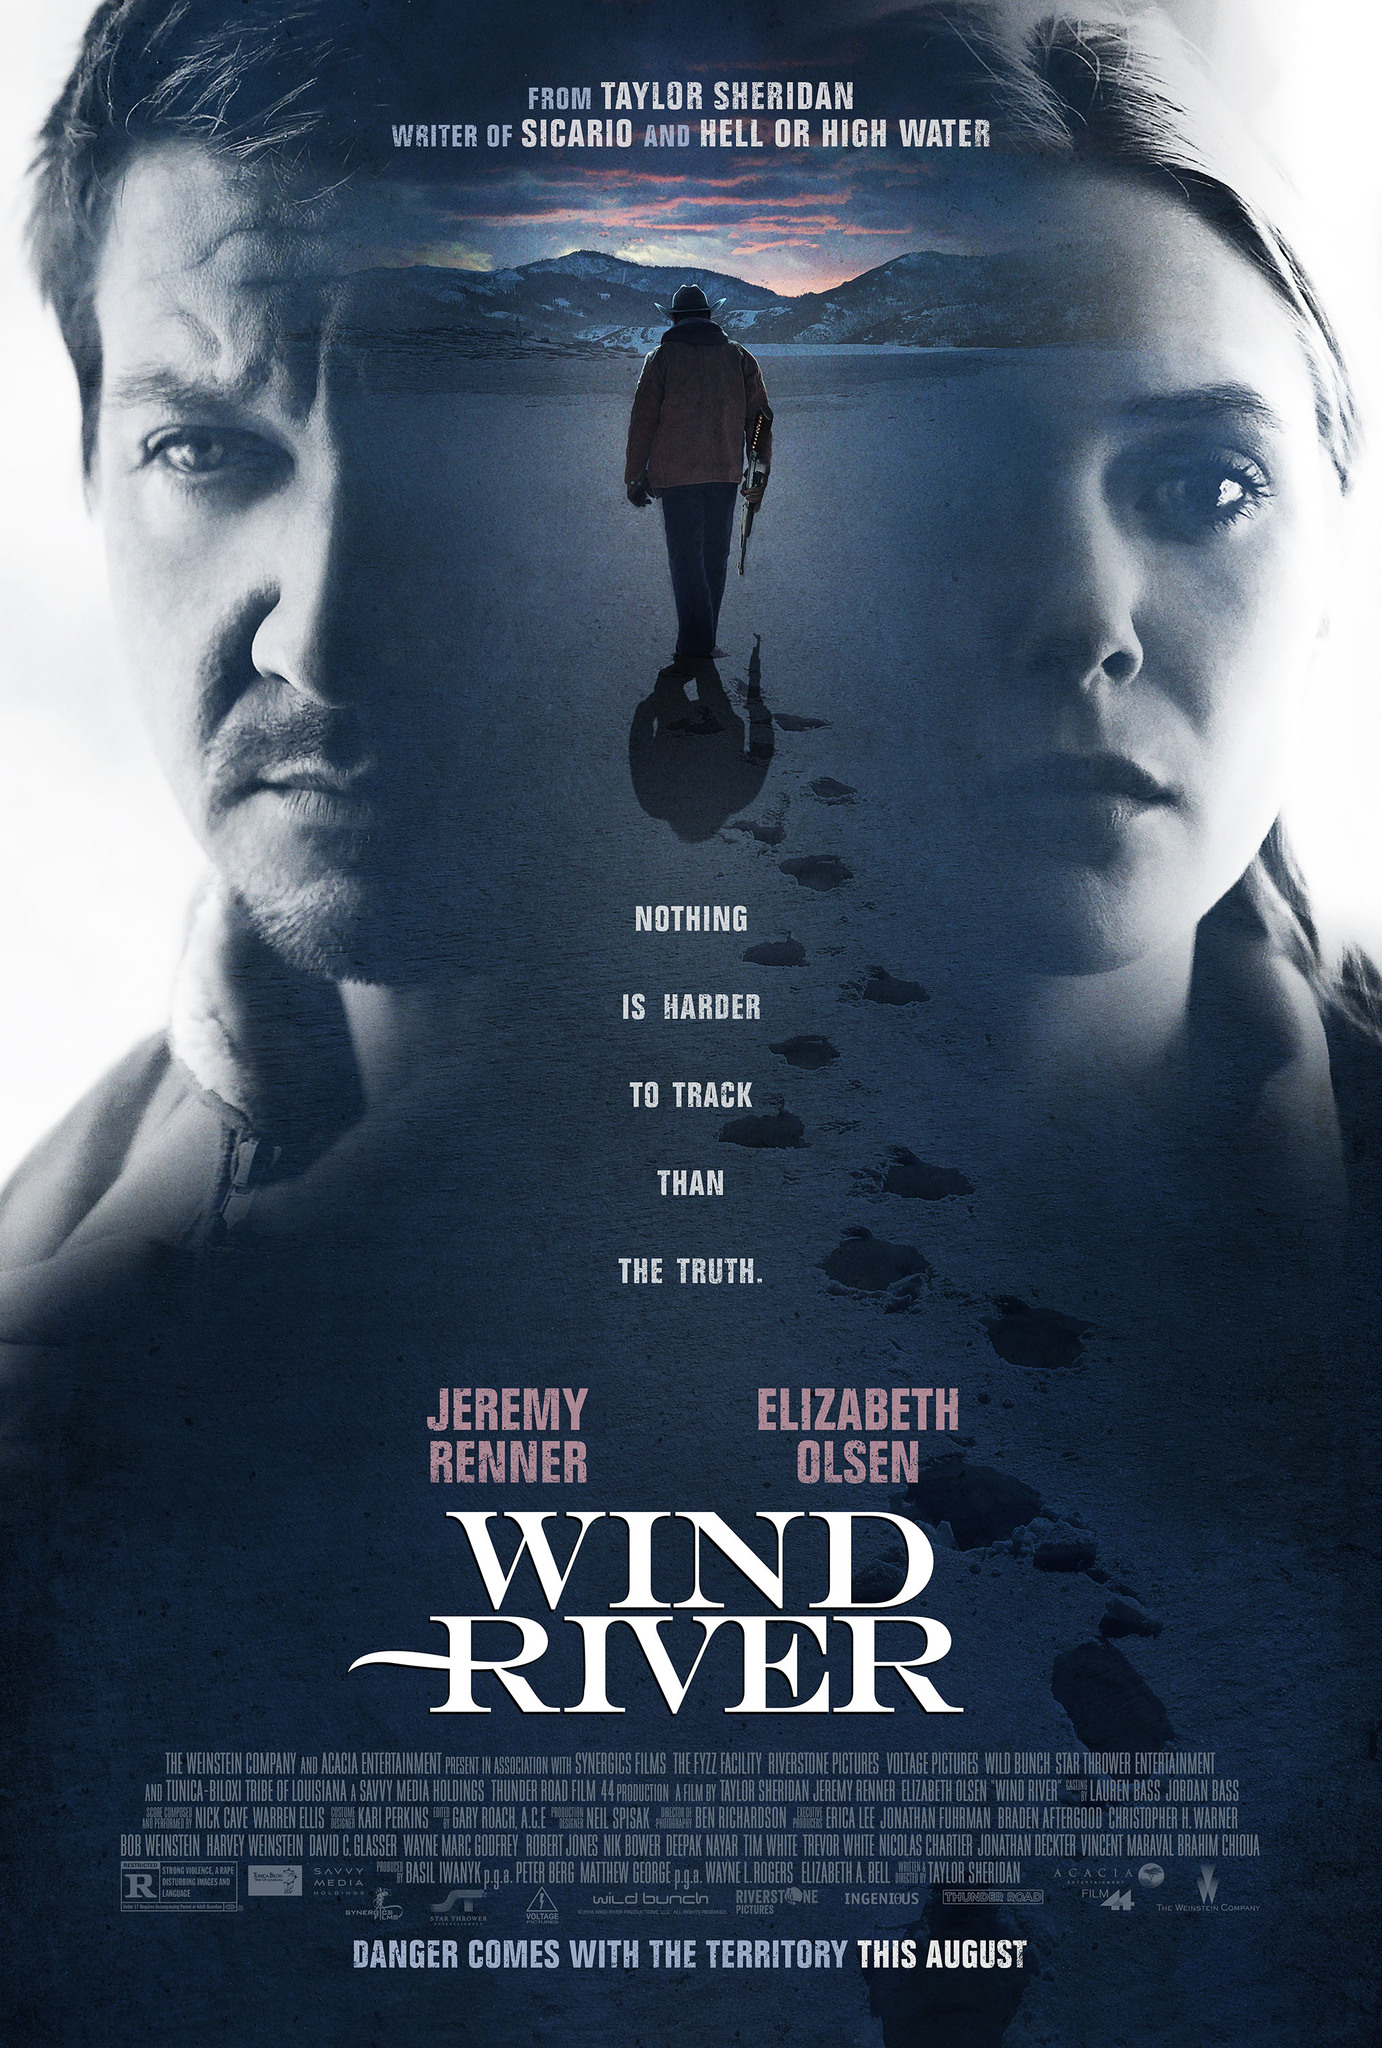 Nonton film Wind River layarkaca21 indoxx1 ganool online streaming terbaru